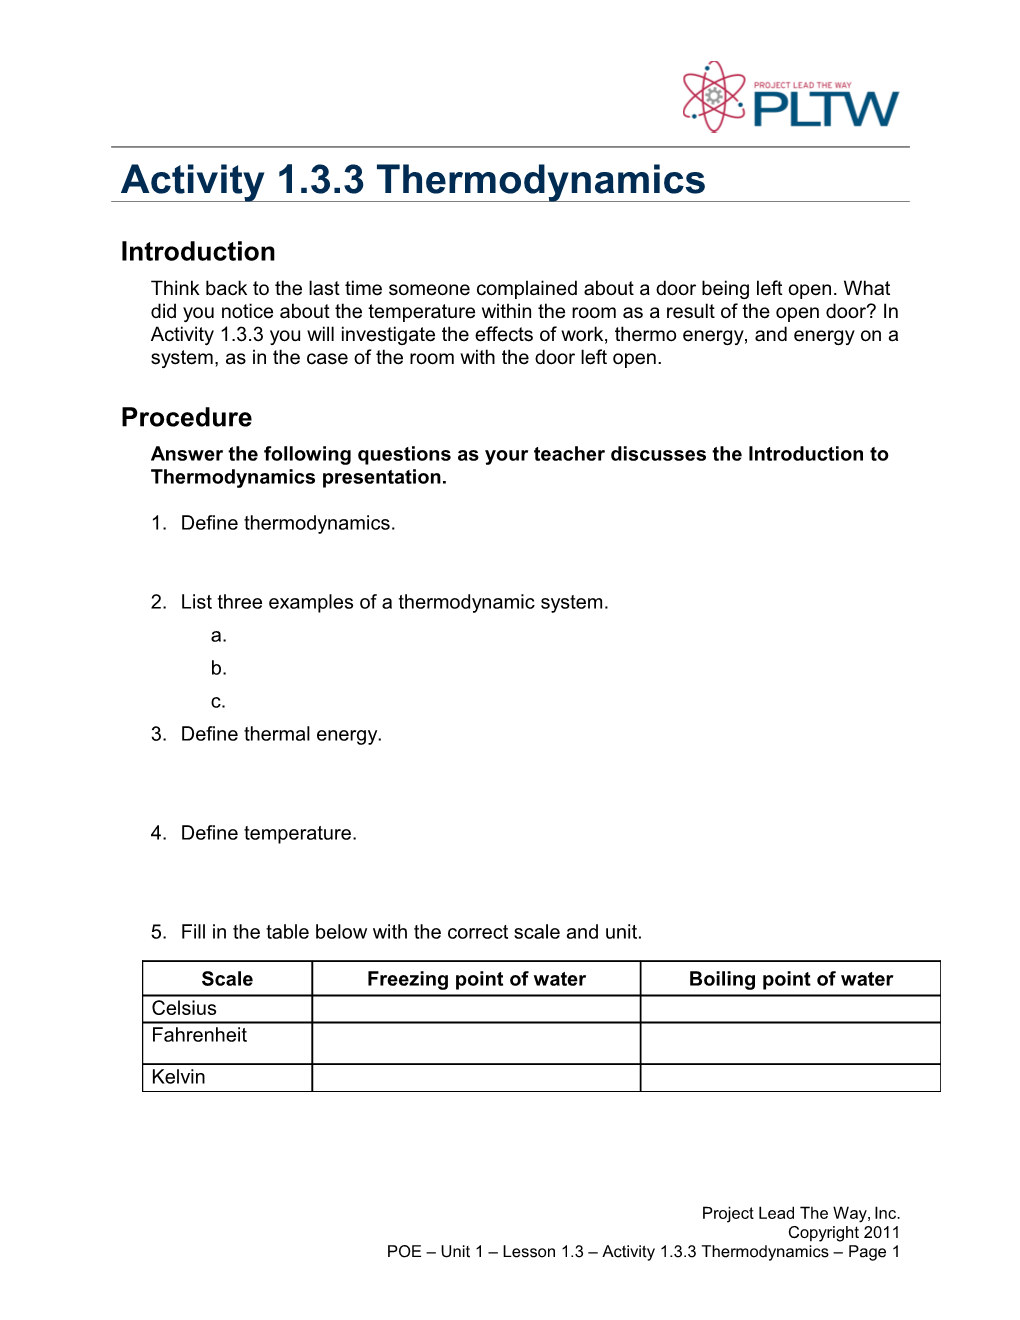 Activity 1.3.3 Thermodynamics (Thermodyndamics Activity Questions)